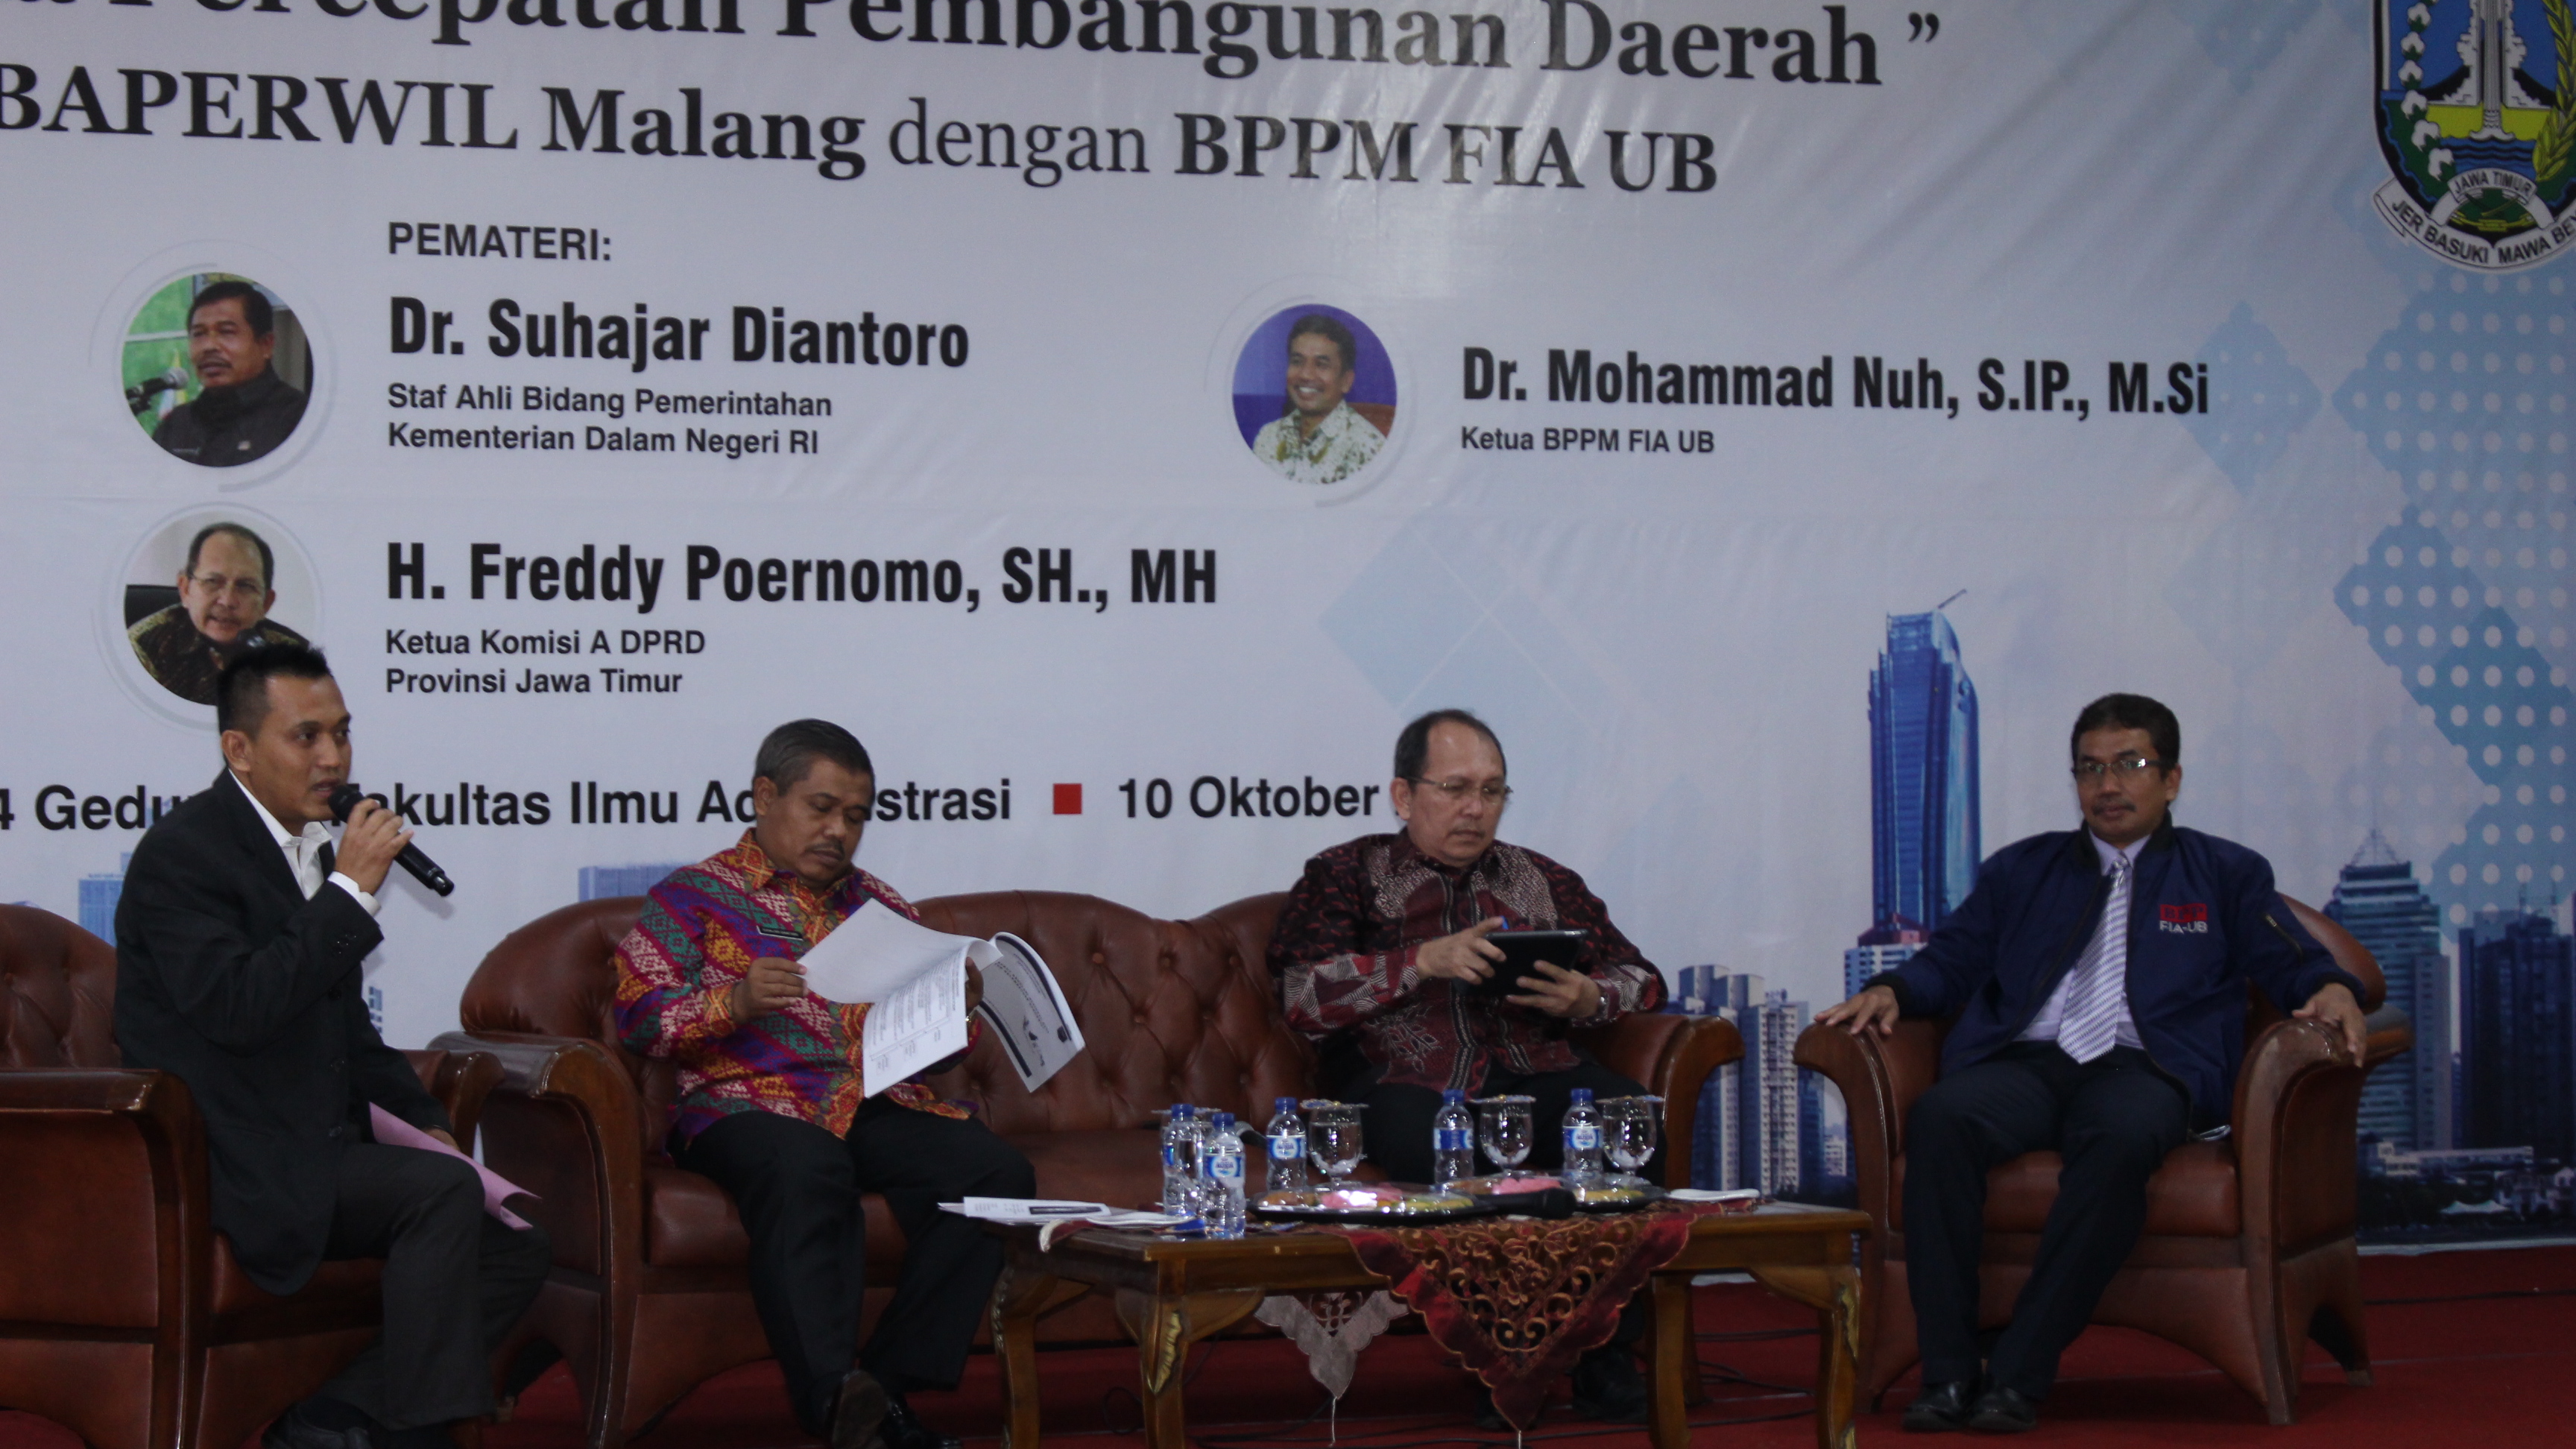 (Ki-ka) Moderator Romy Hermawan, Suhajar Diantoro, Freddy Poernomo, Mohammad Nuh